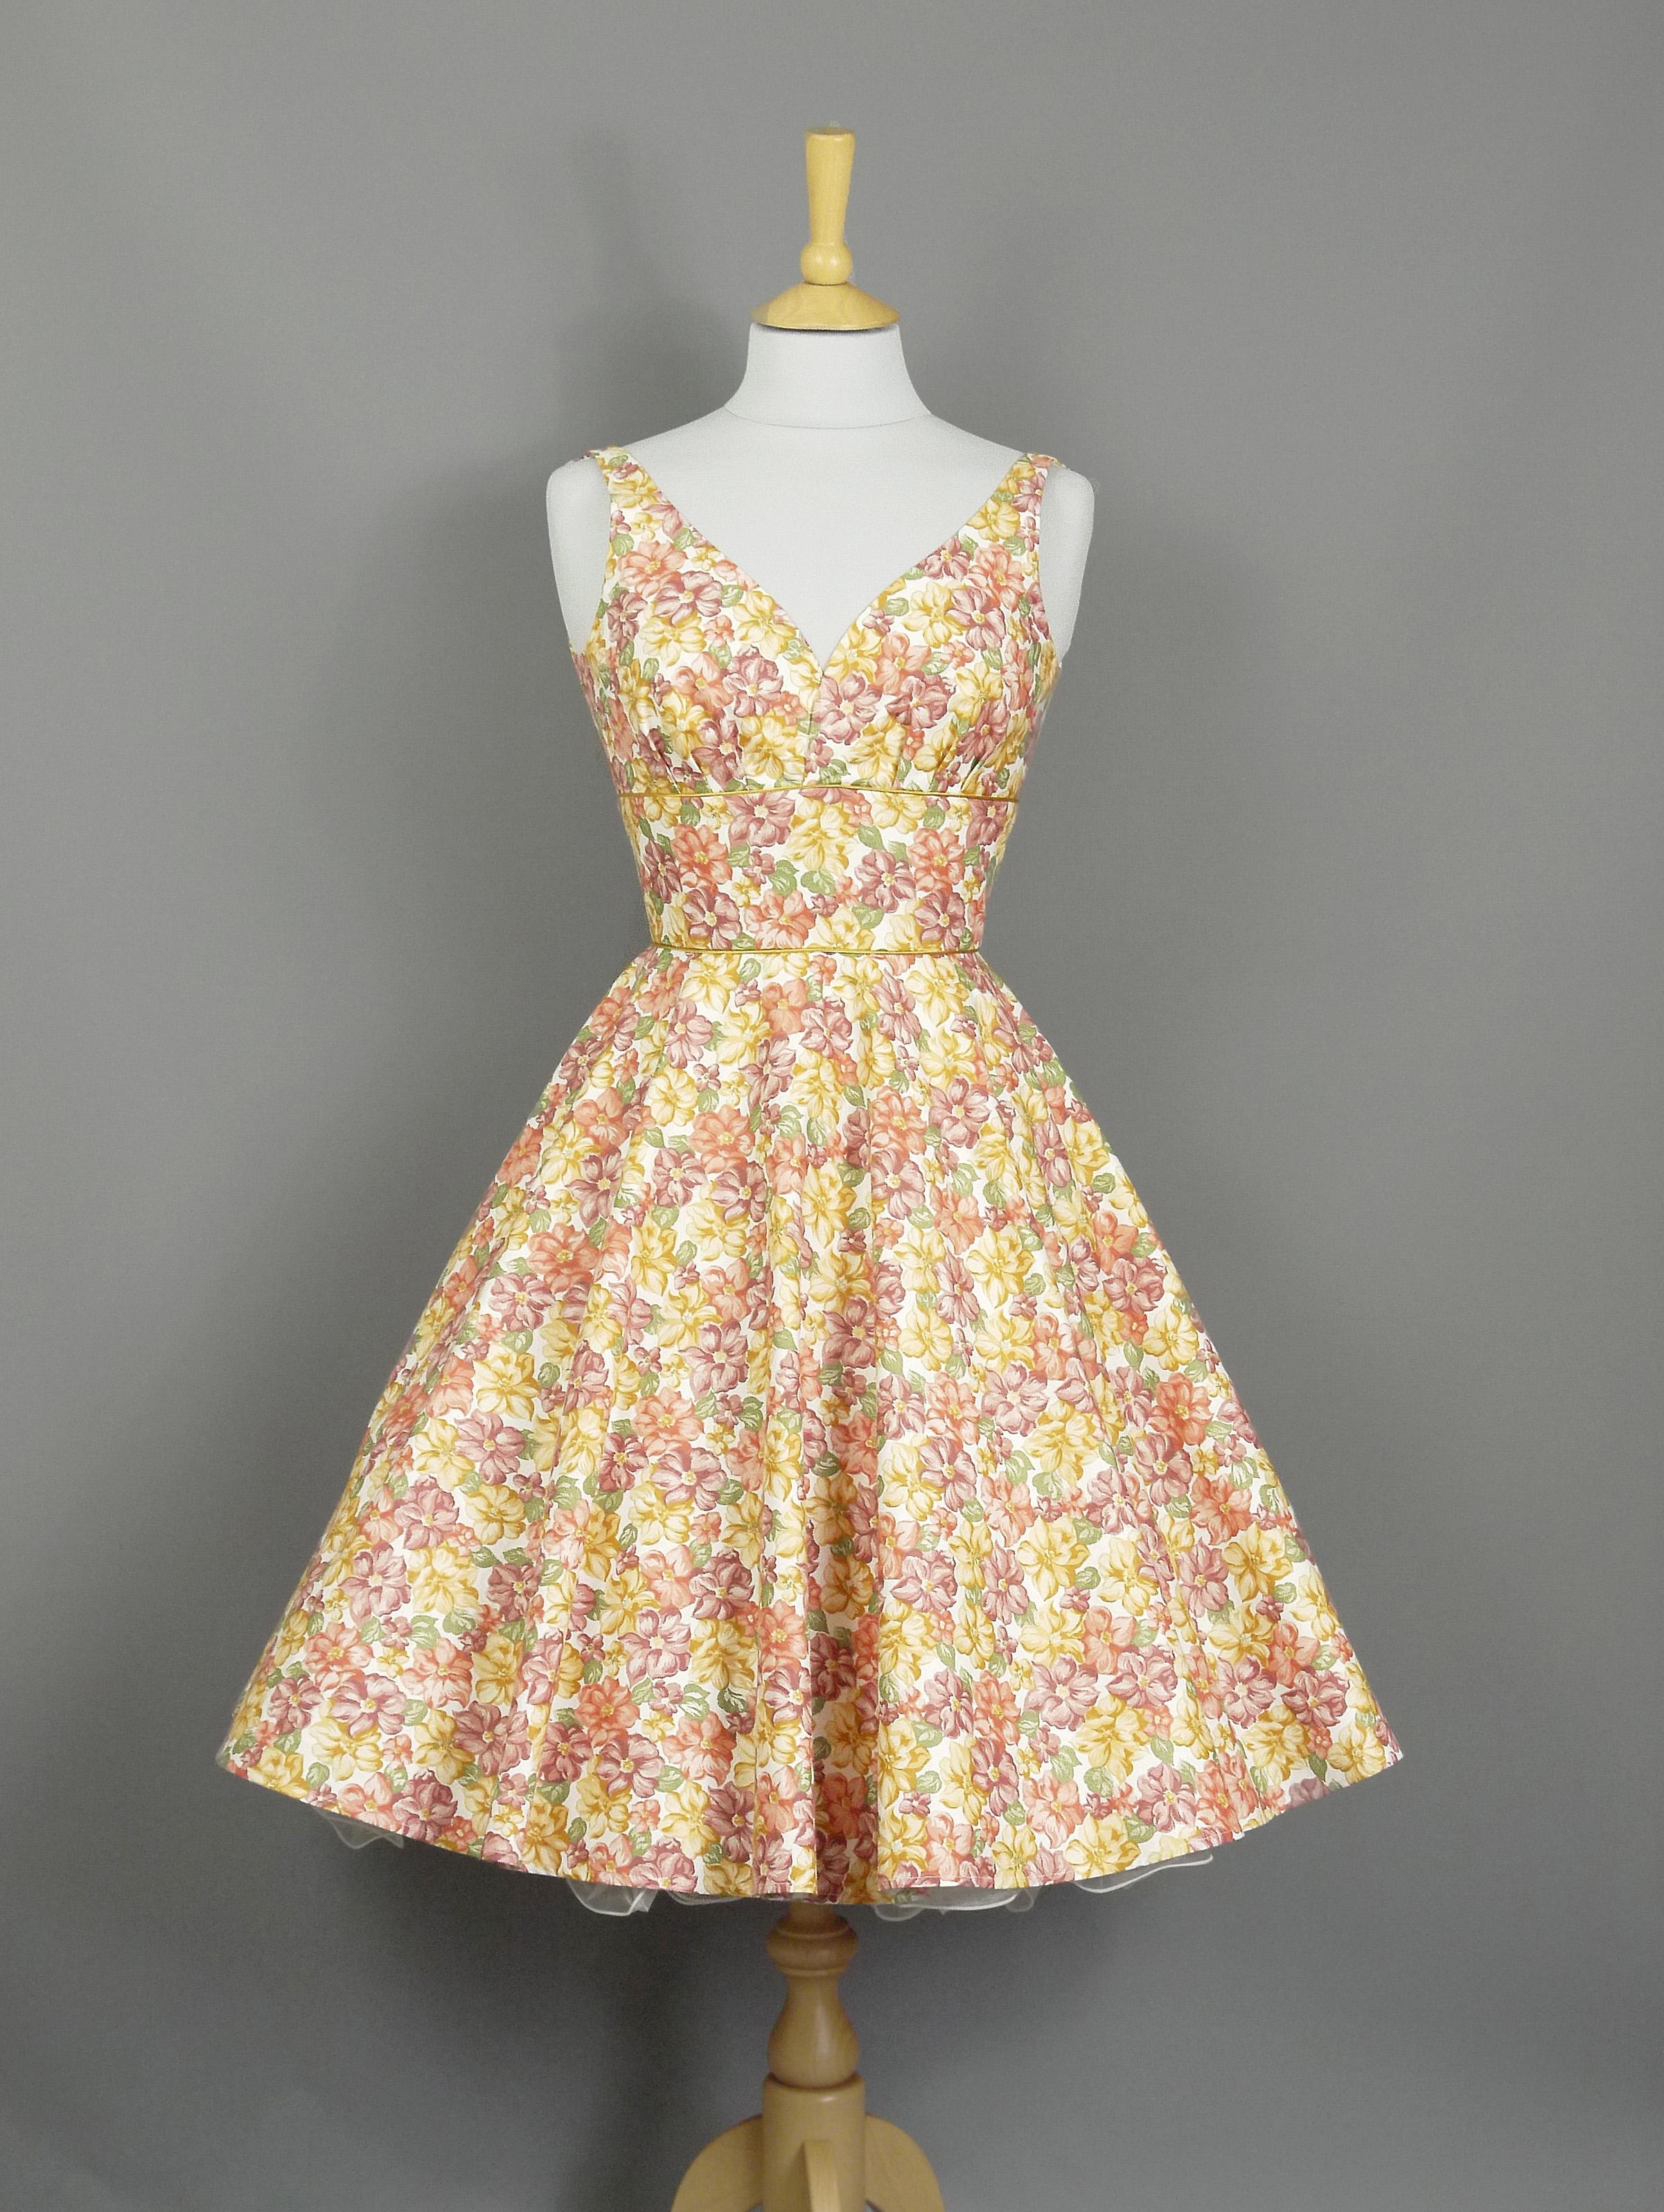 Vintage sun dress floral circle dress milk maid dress fit and flared mid length rockabilly tea dress